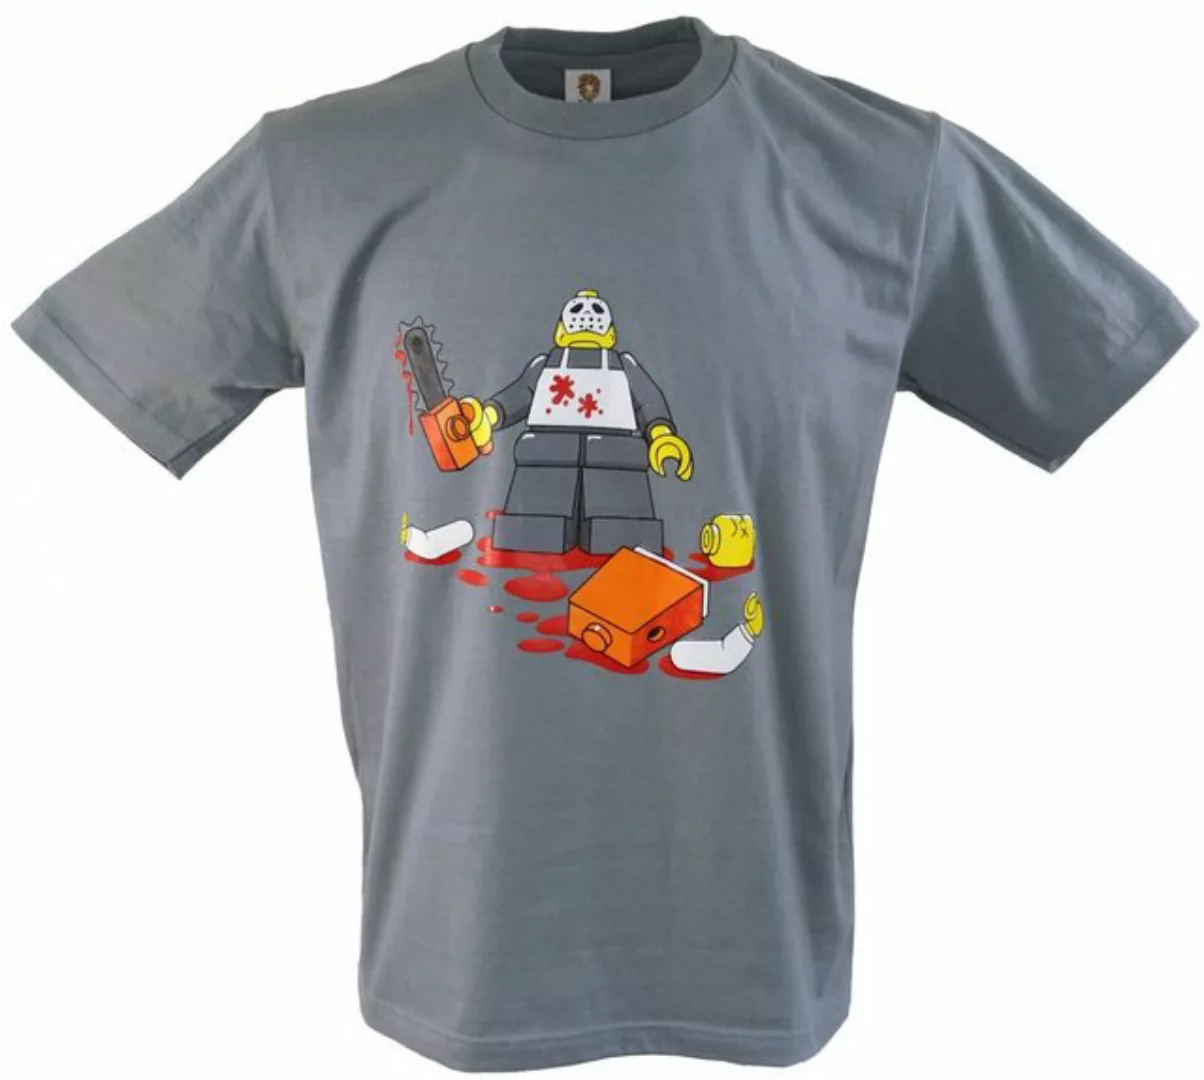 Guru-Shop T-Shirt Fun Retro Art T-Shirt - Robo Killer alternative Bekleidun günstig online kaufen